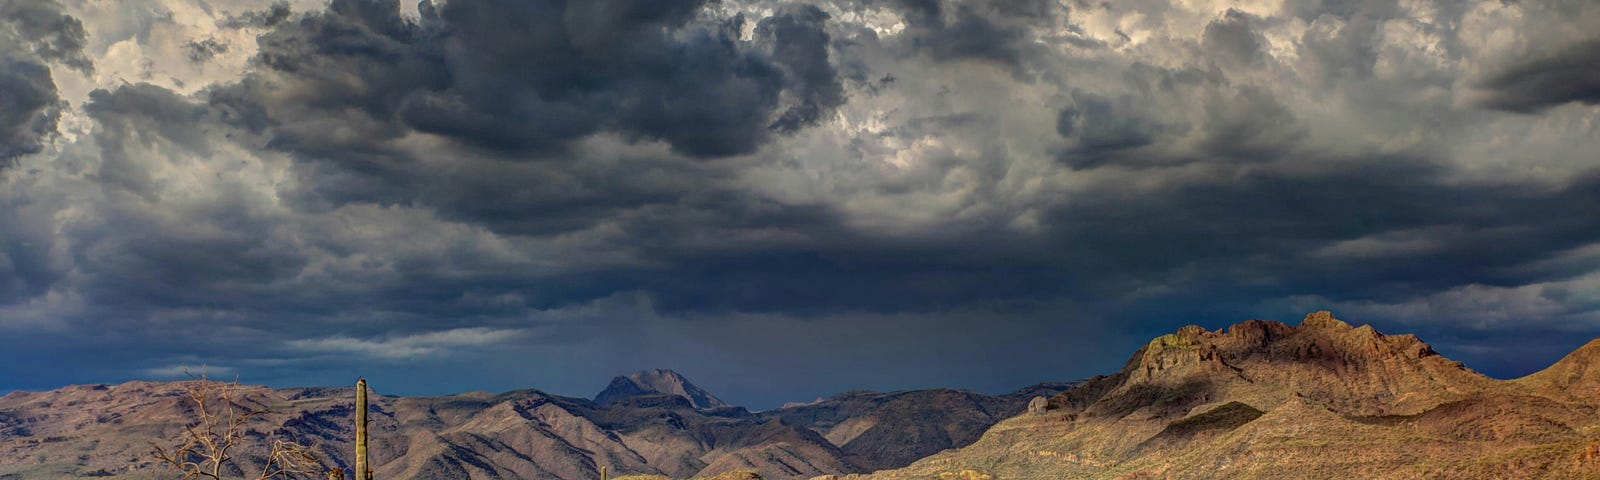 Desert scene, tall cacti under a stormy sky